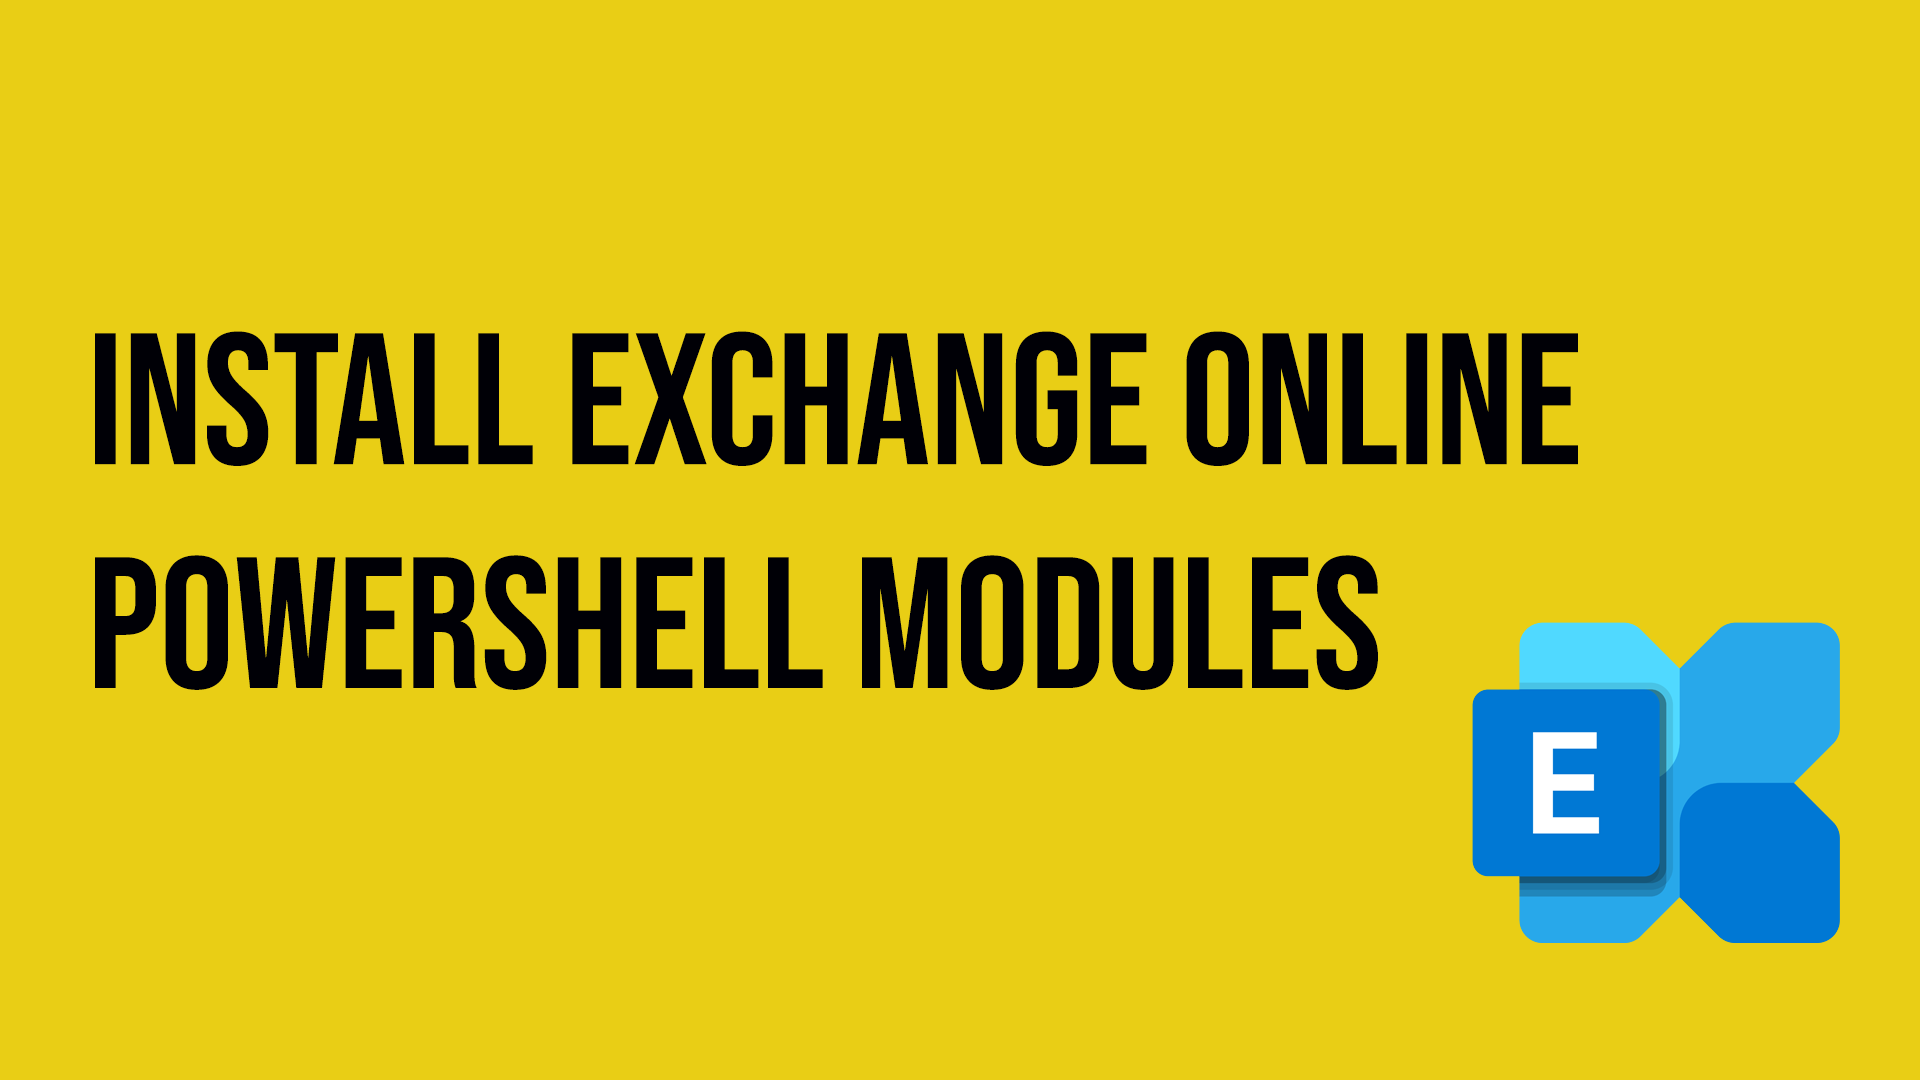 install module exchange online